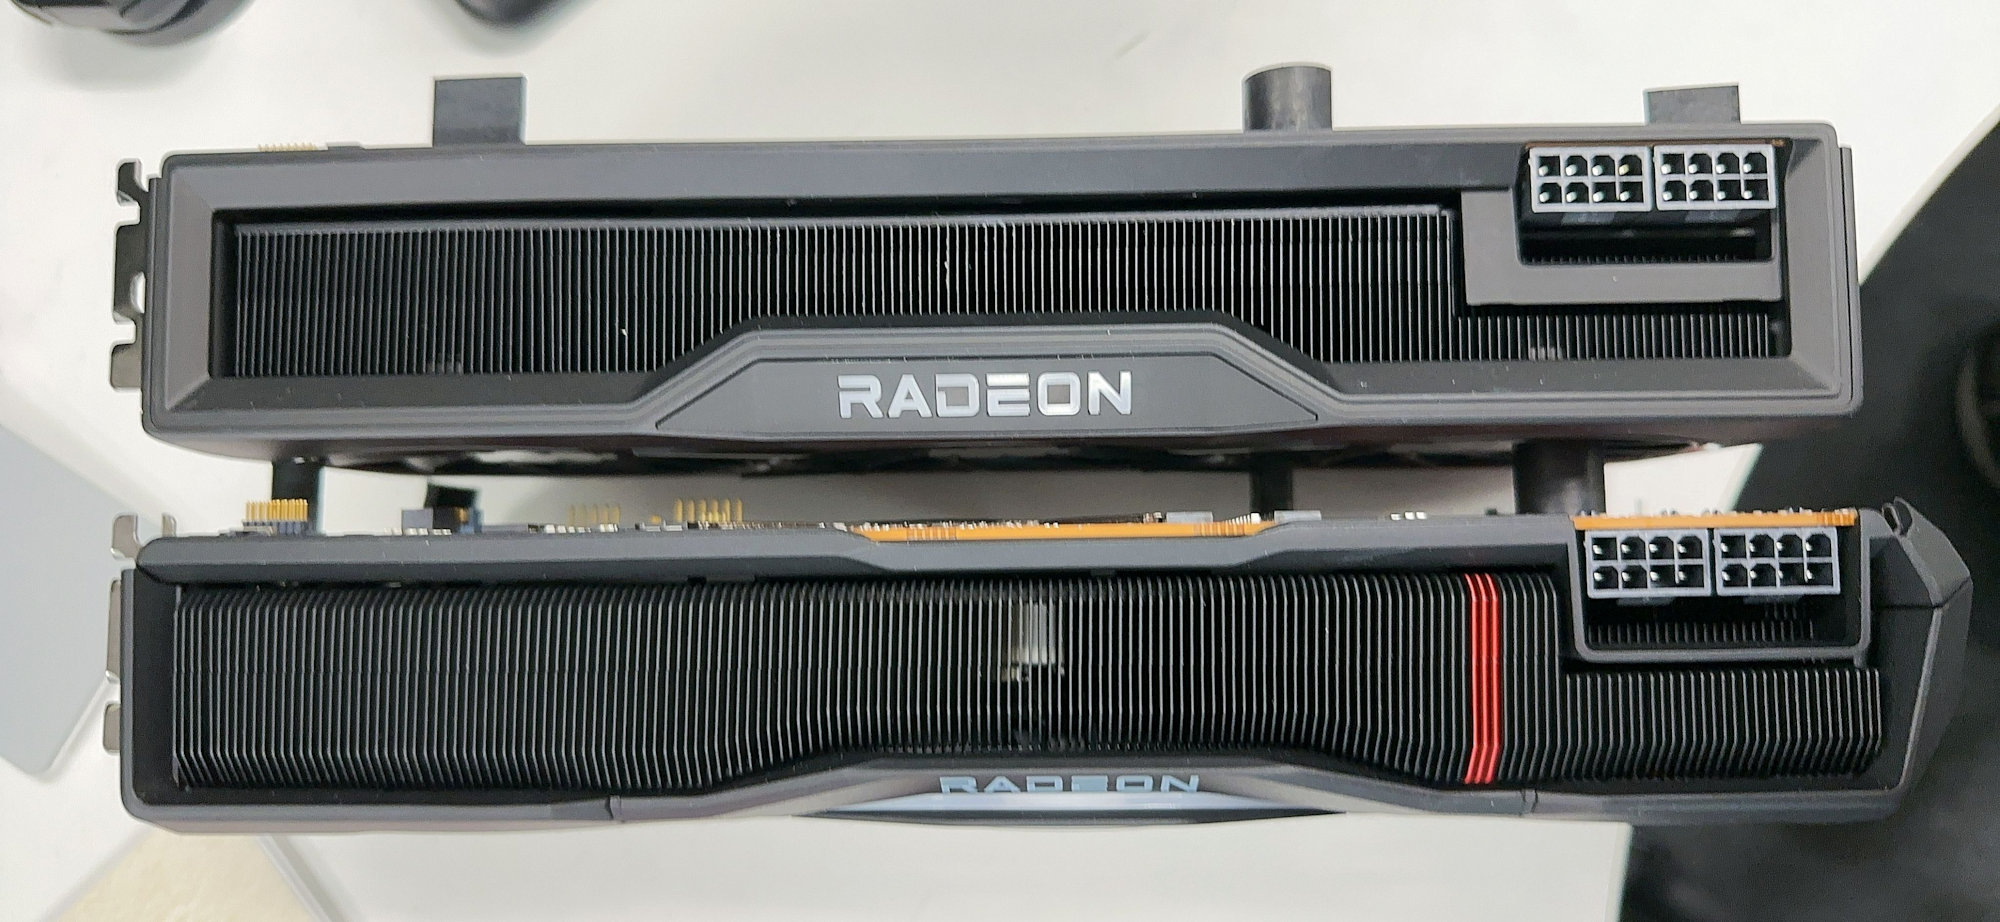 AMD RX 7900 XTX and RX 7900 XT review: great GPUs, no Nvidia killers